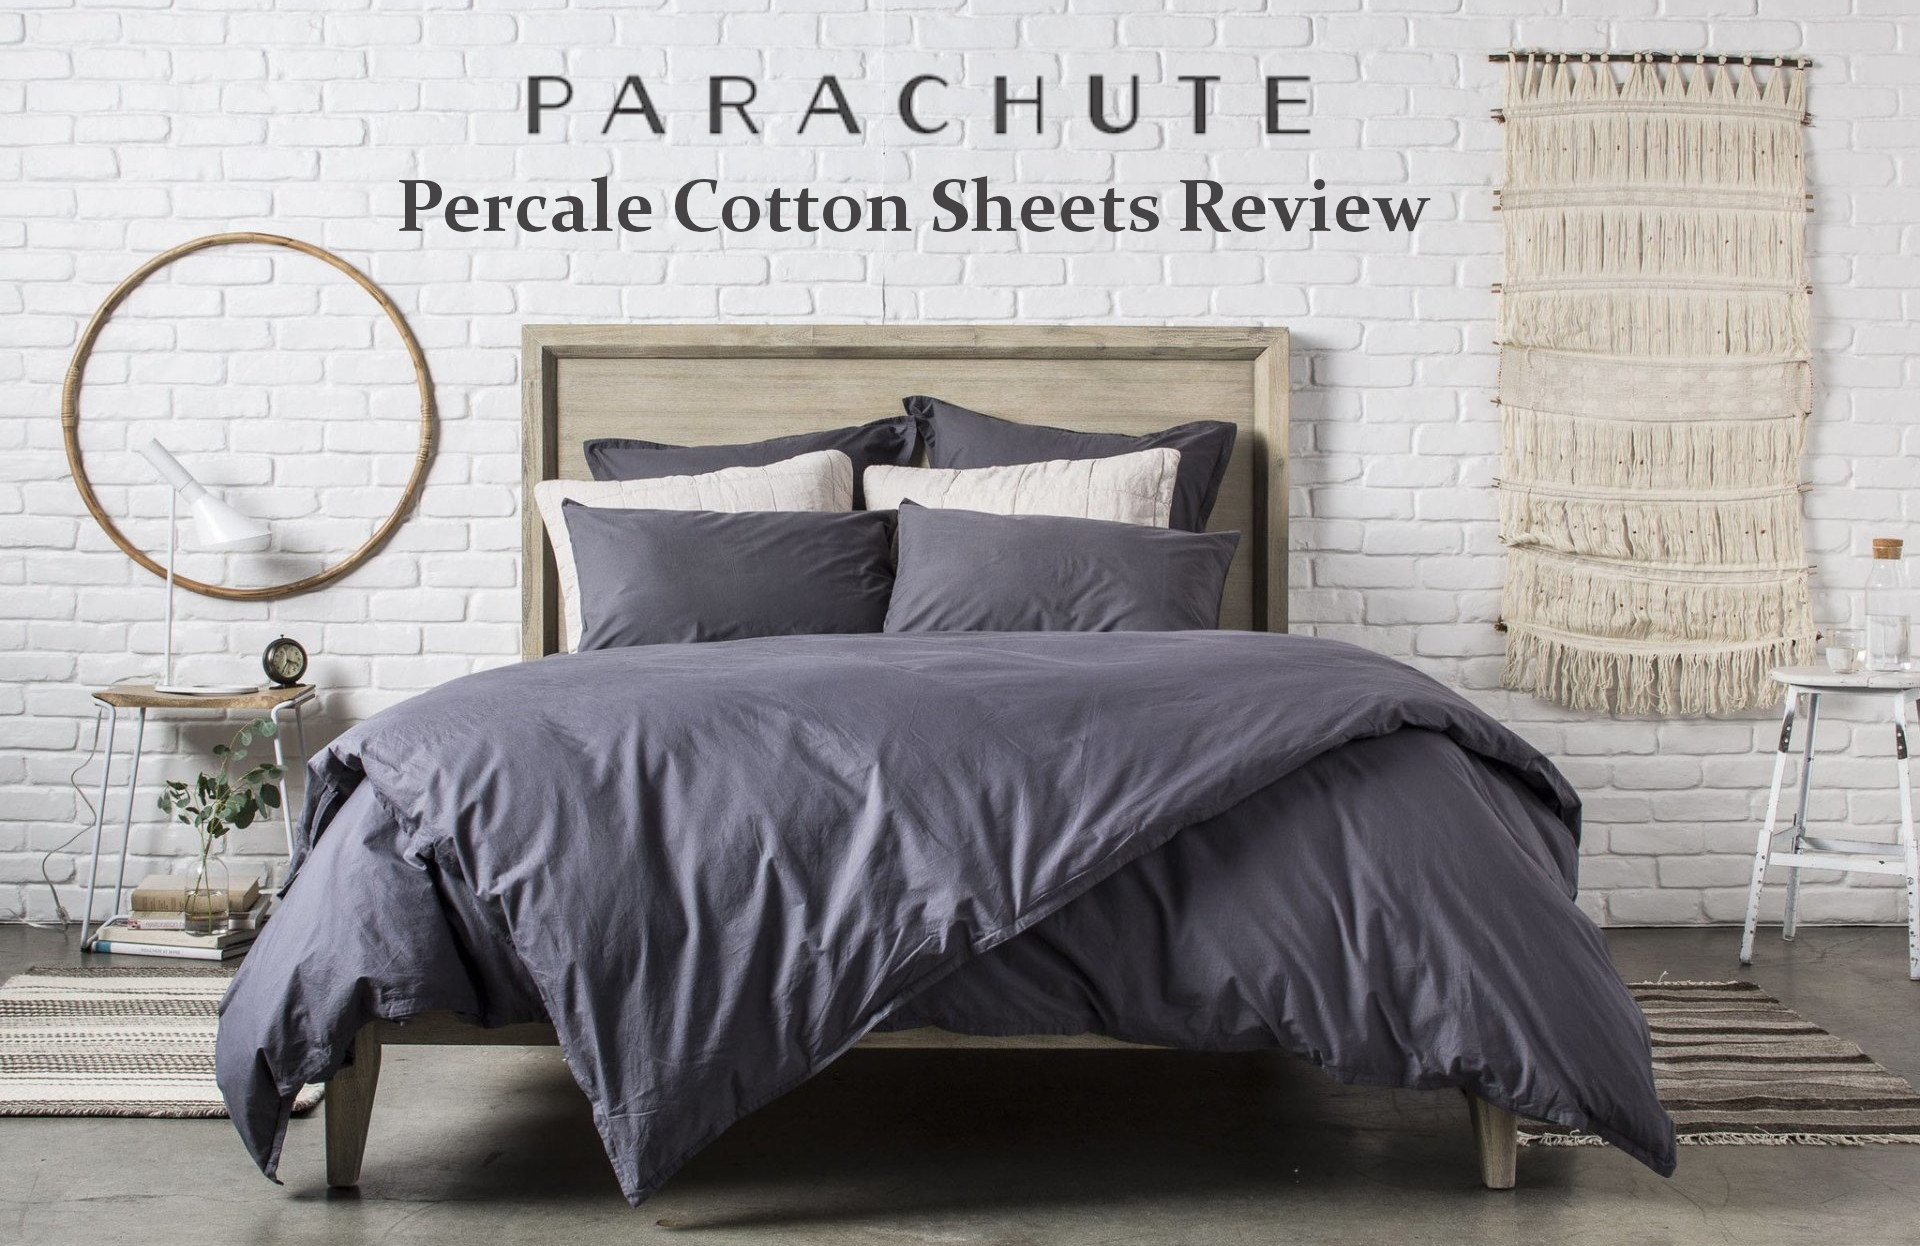 parachute percale cotton sheets review